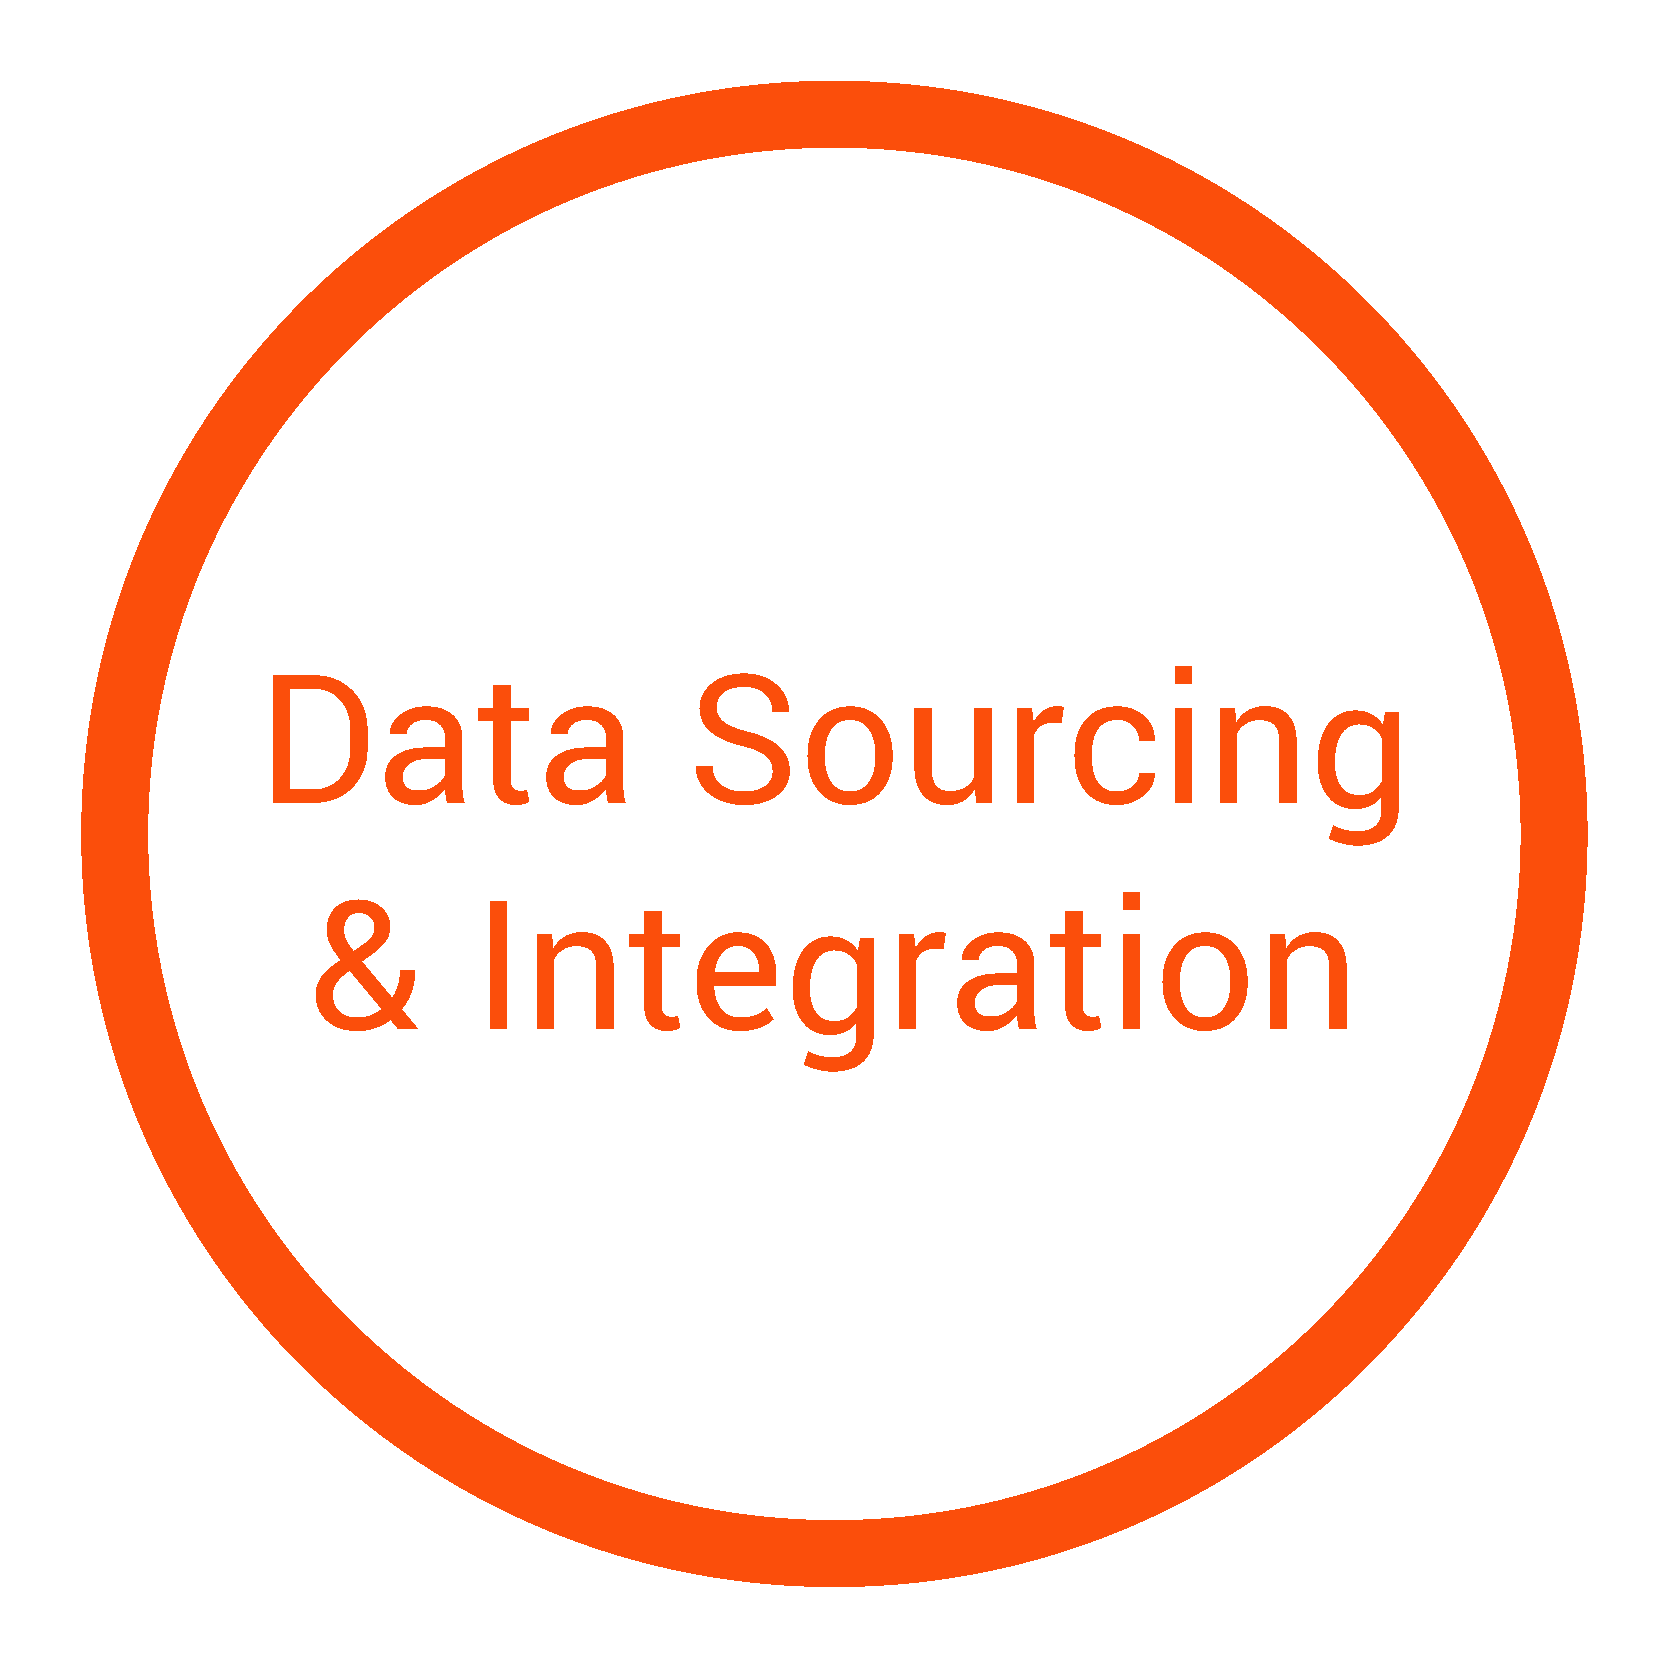 Data Sourcing & Integration